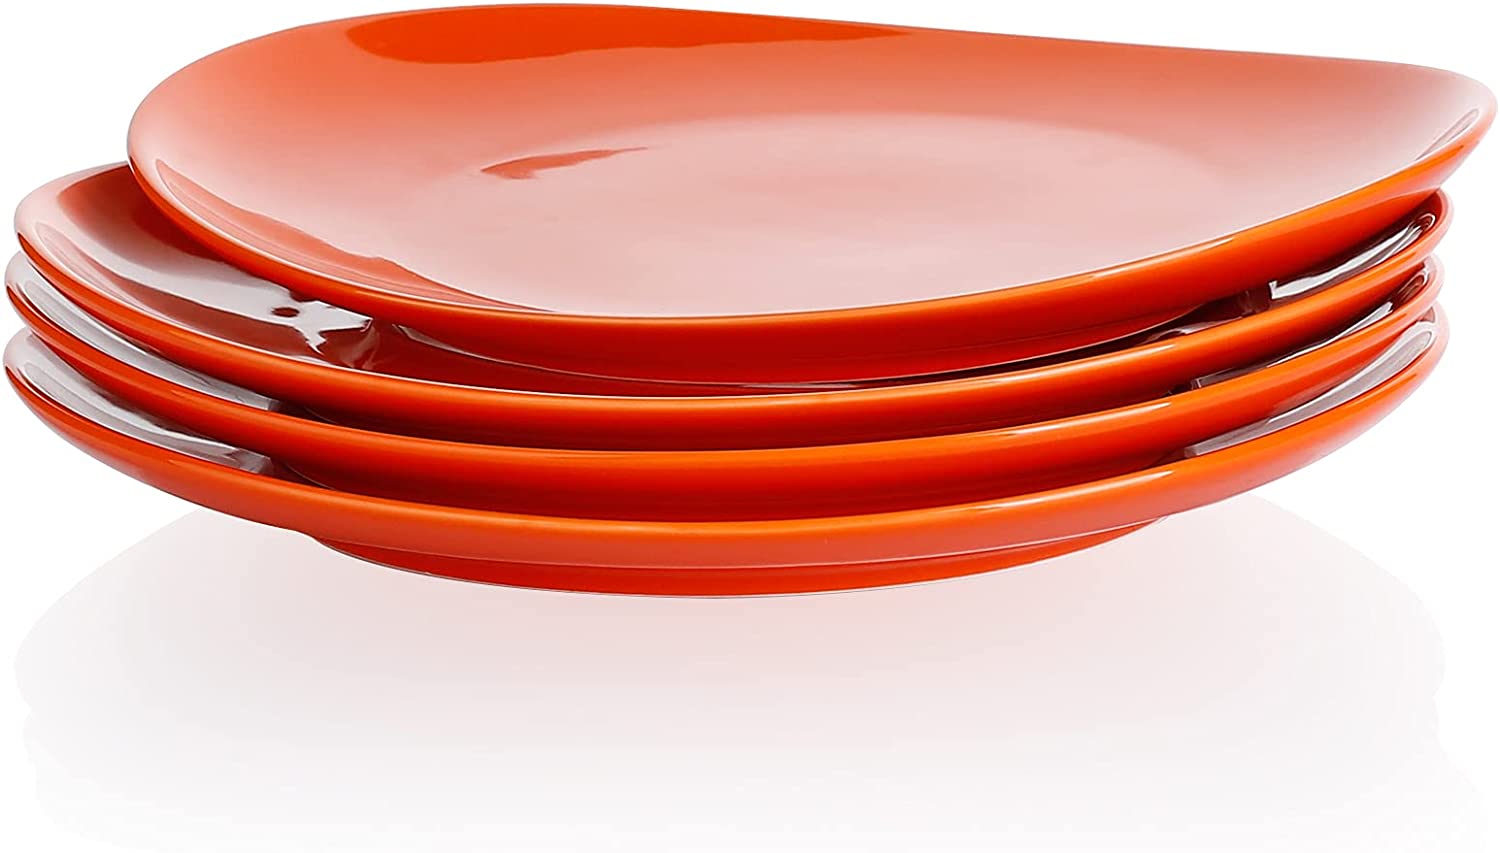 Mora Ceramics Scratch-Resistant Round Ceramic Plates, 6-Piece